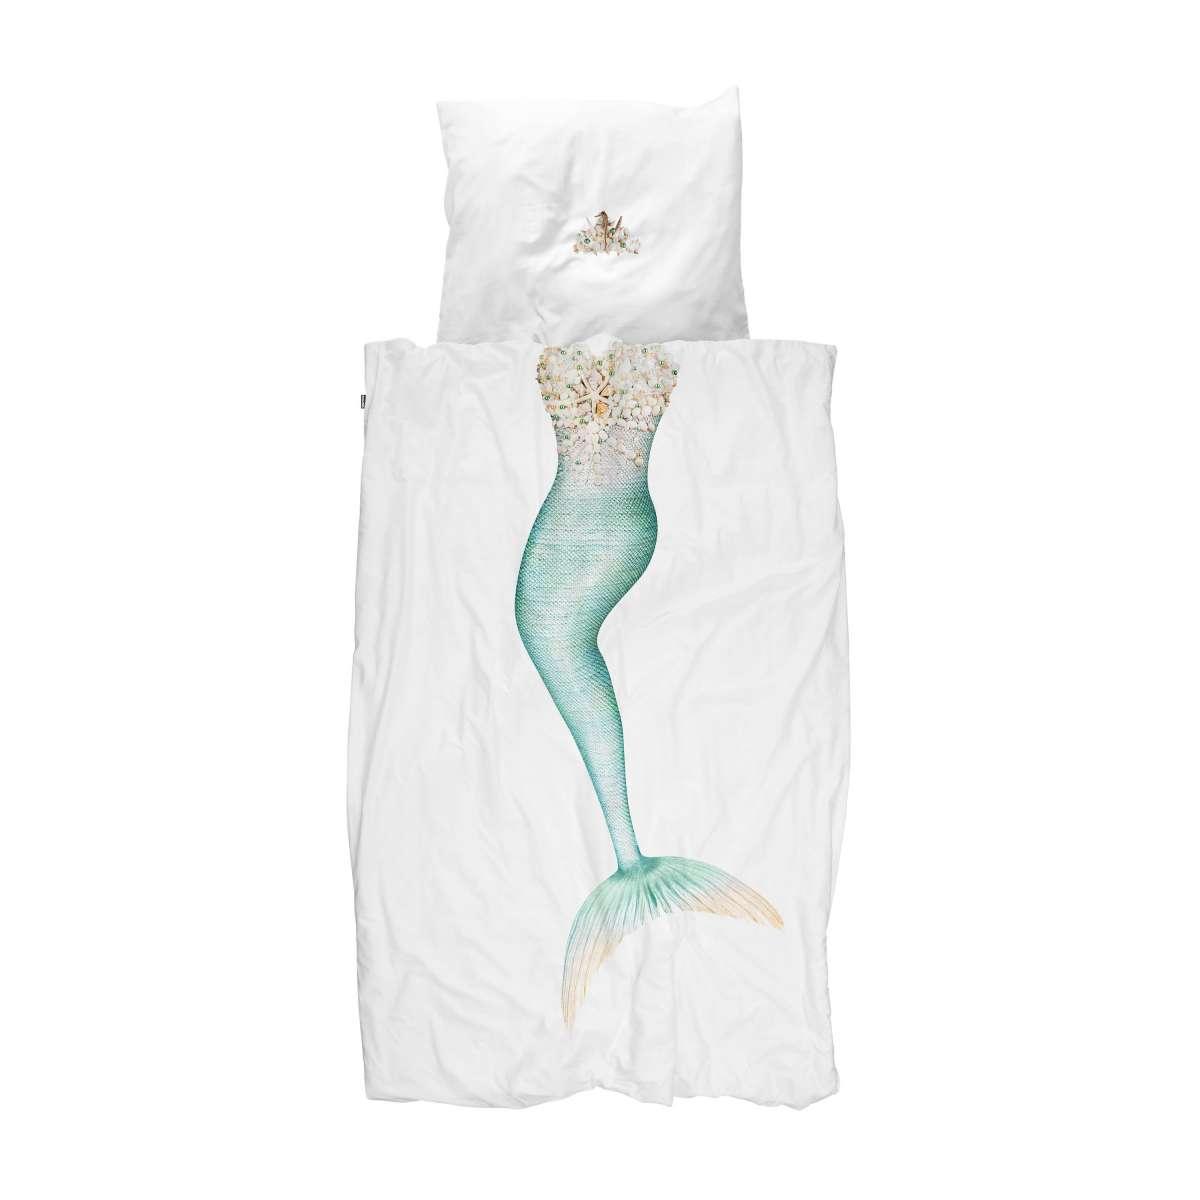 Mermaid dekbedovertrek - SNURK